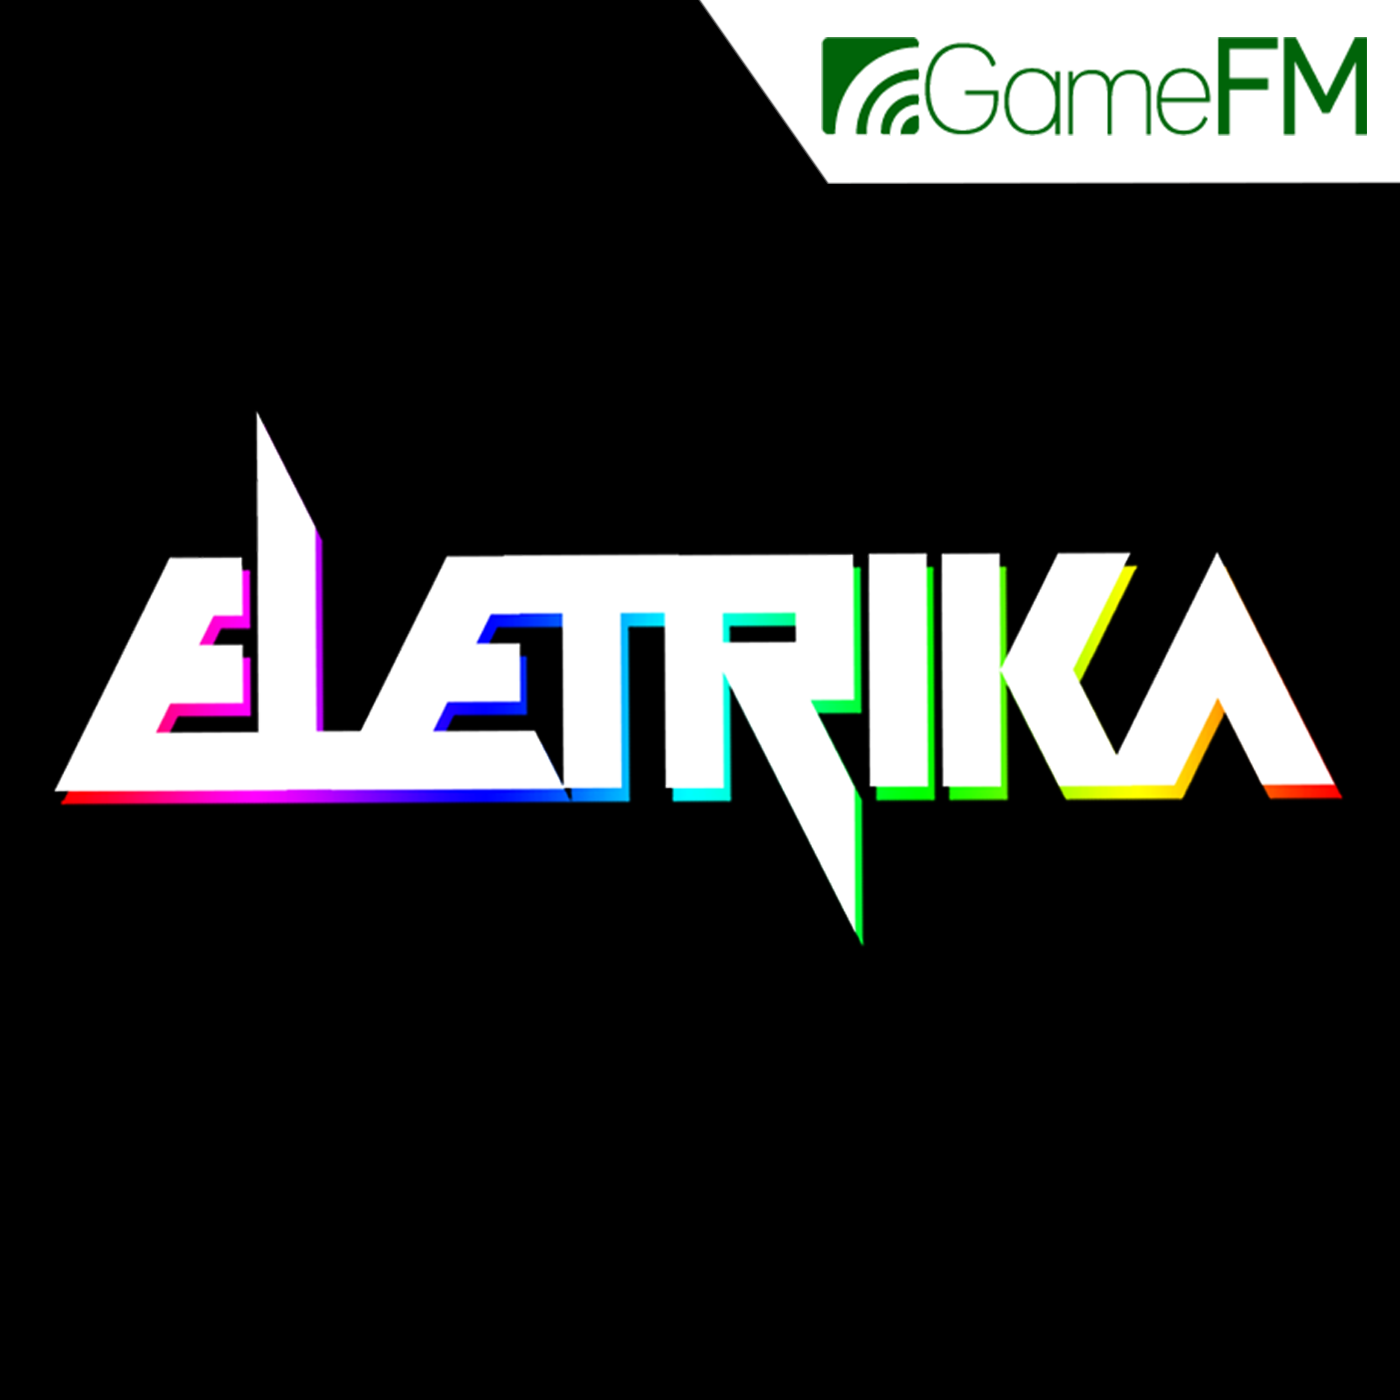 Eletrika (GameFM)